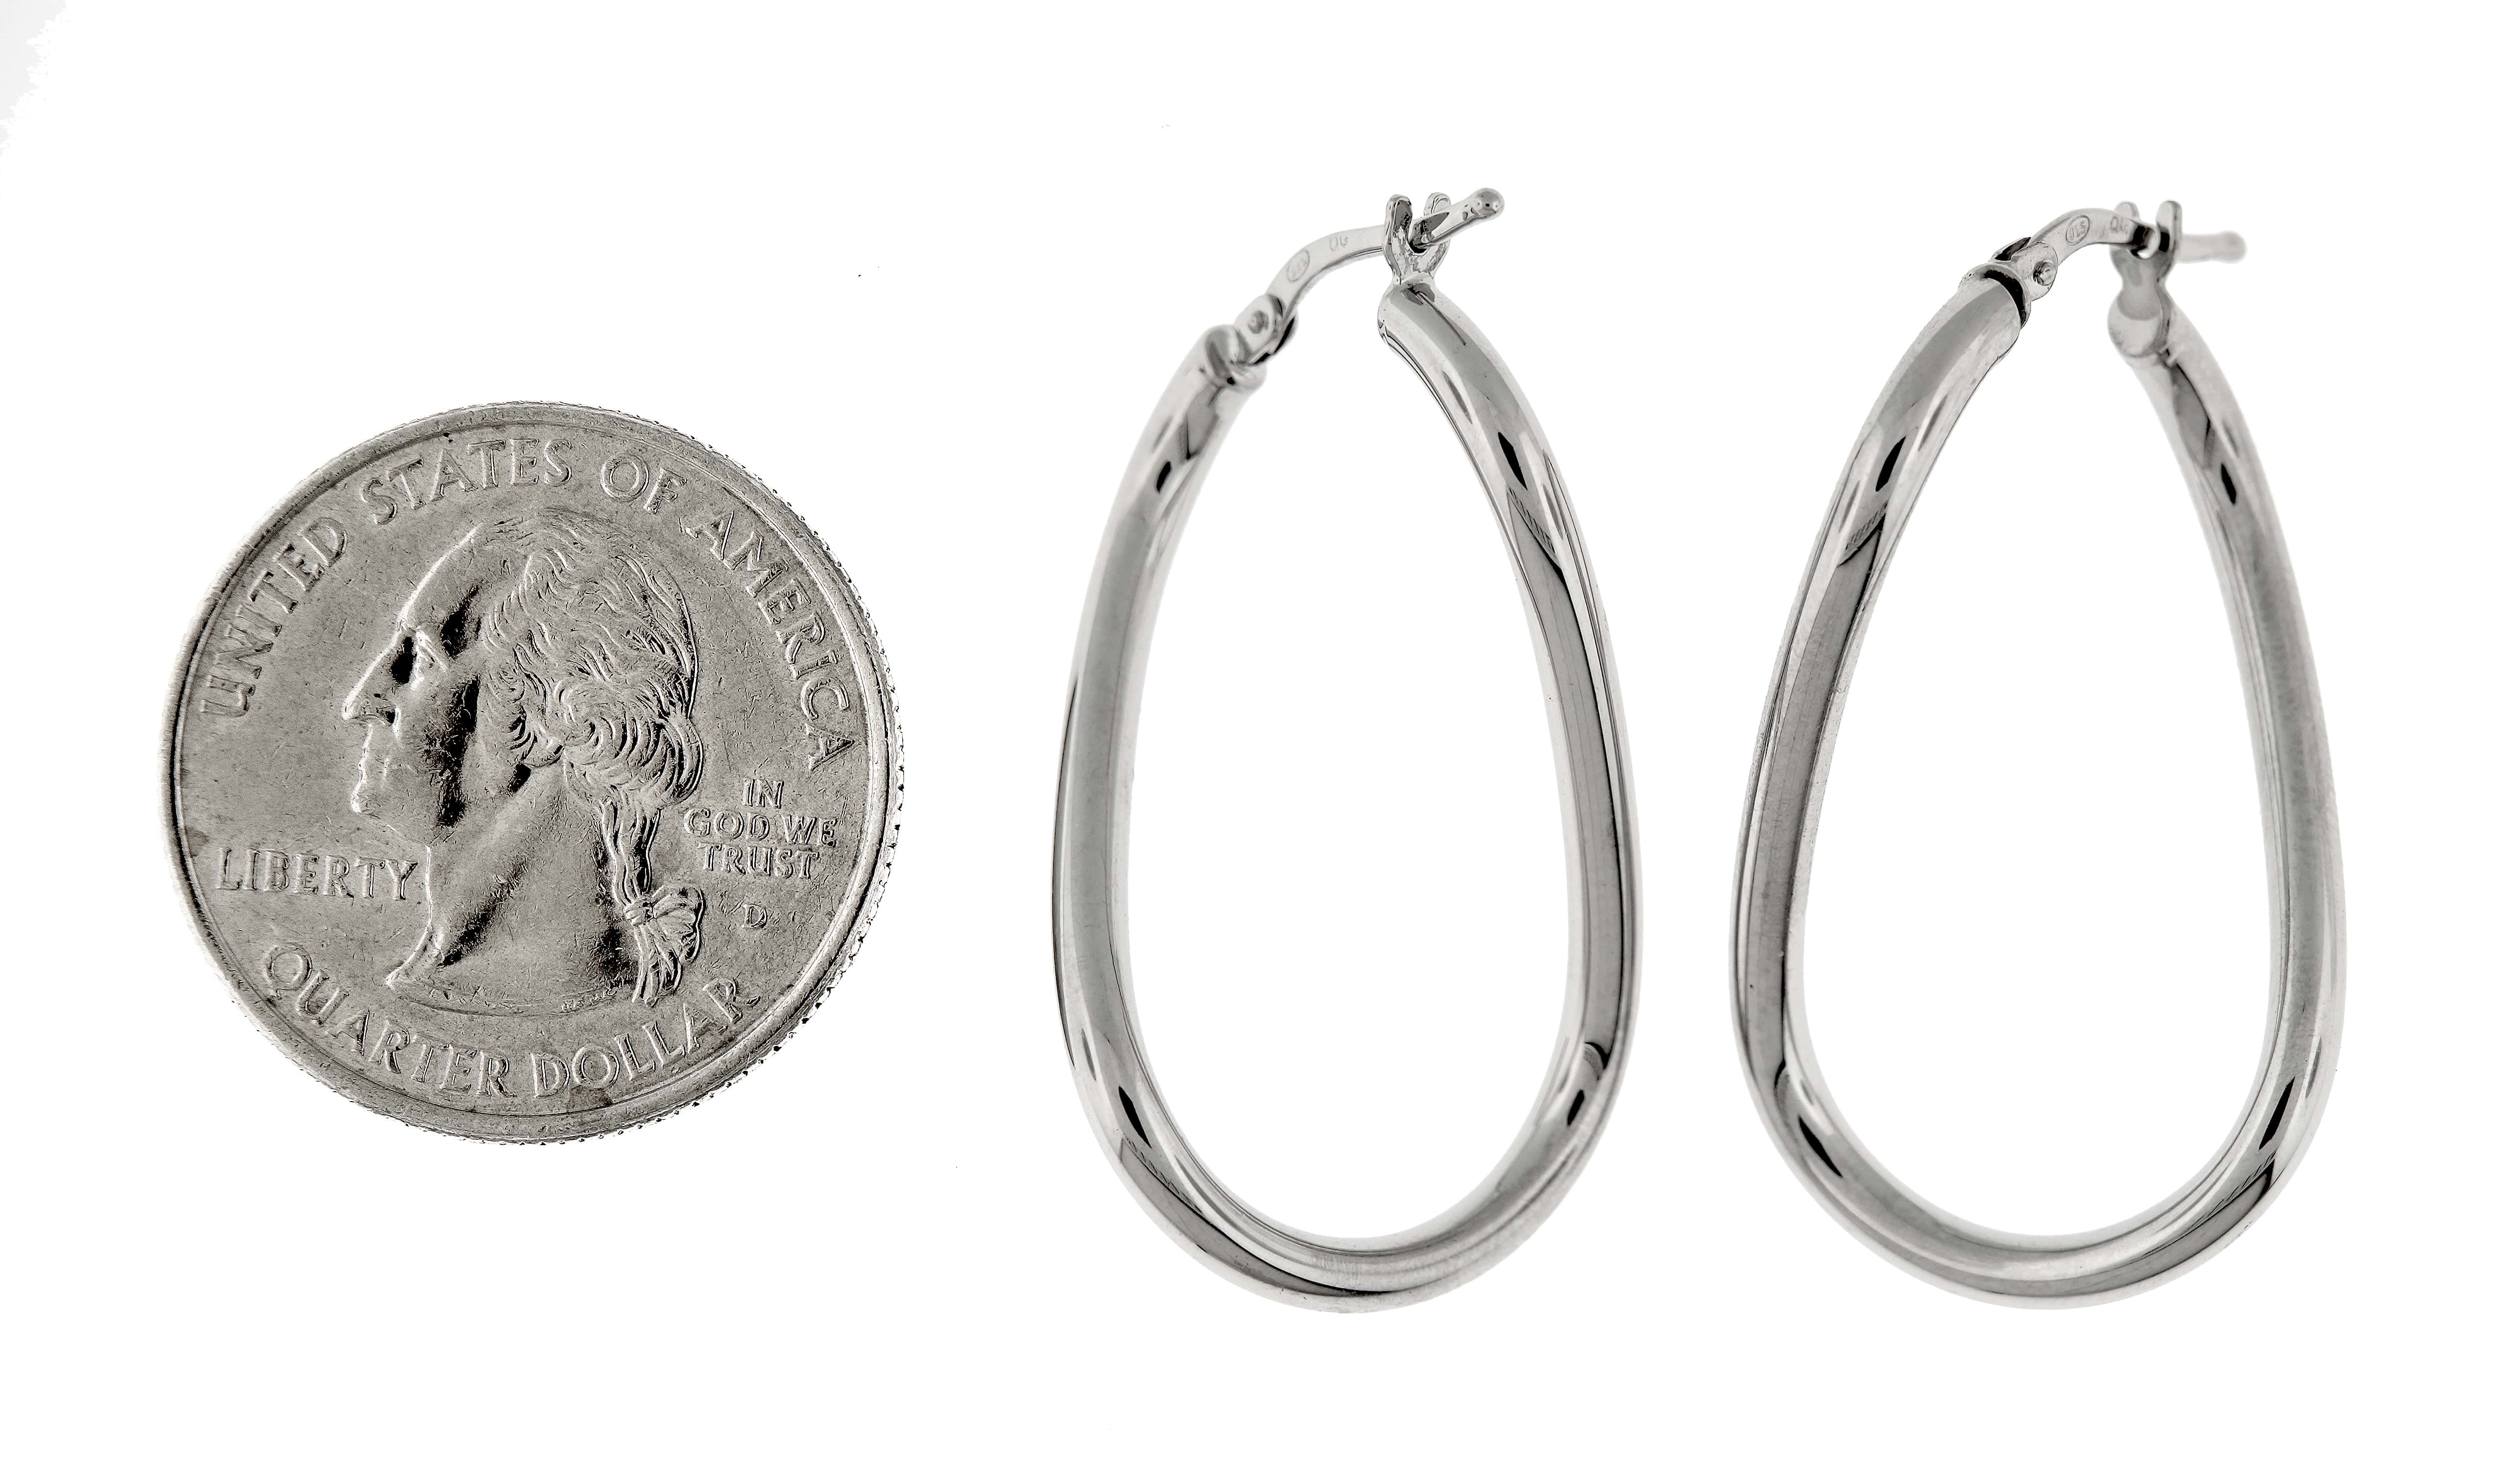 Sterling Silver Twisted Hoop Earrings 32mm x 18mm